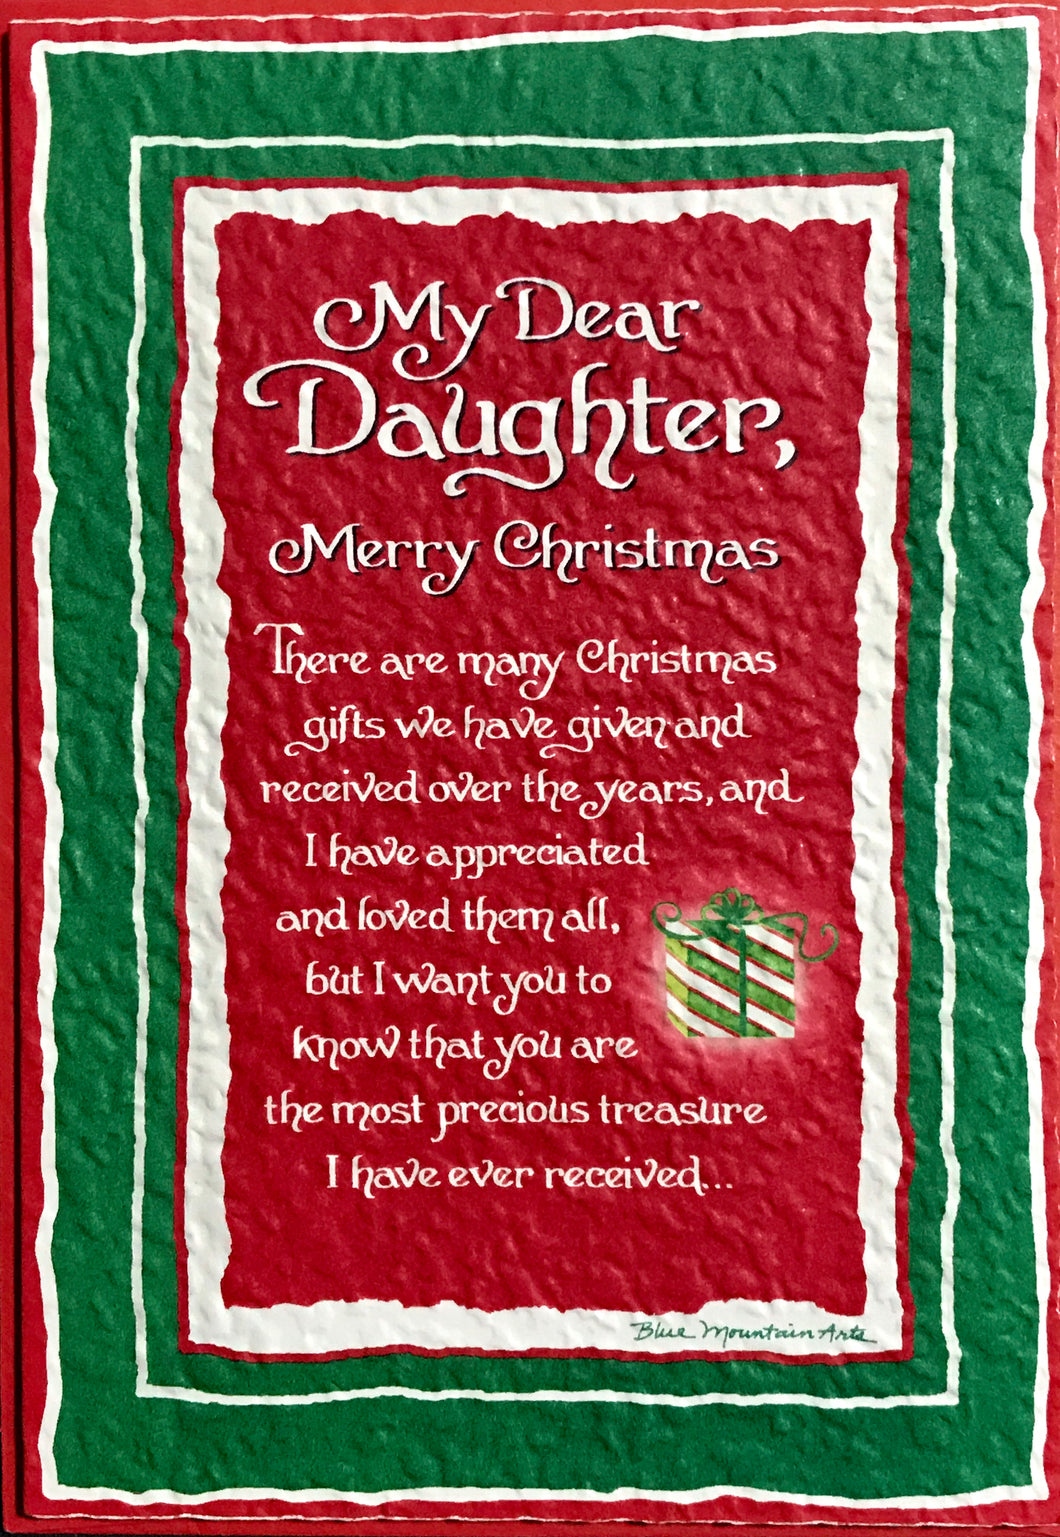 My Dear Daughter, Merry Christmas